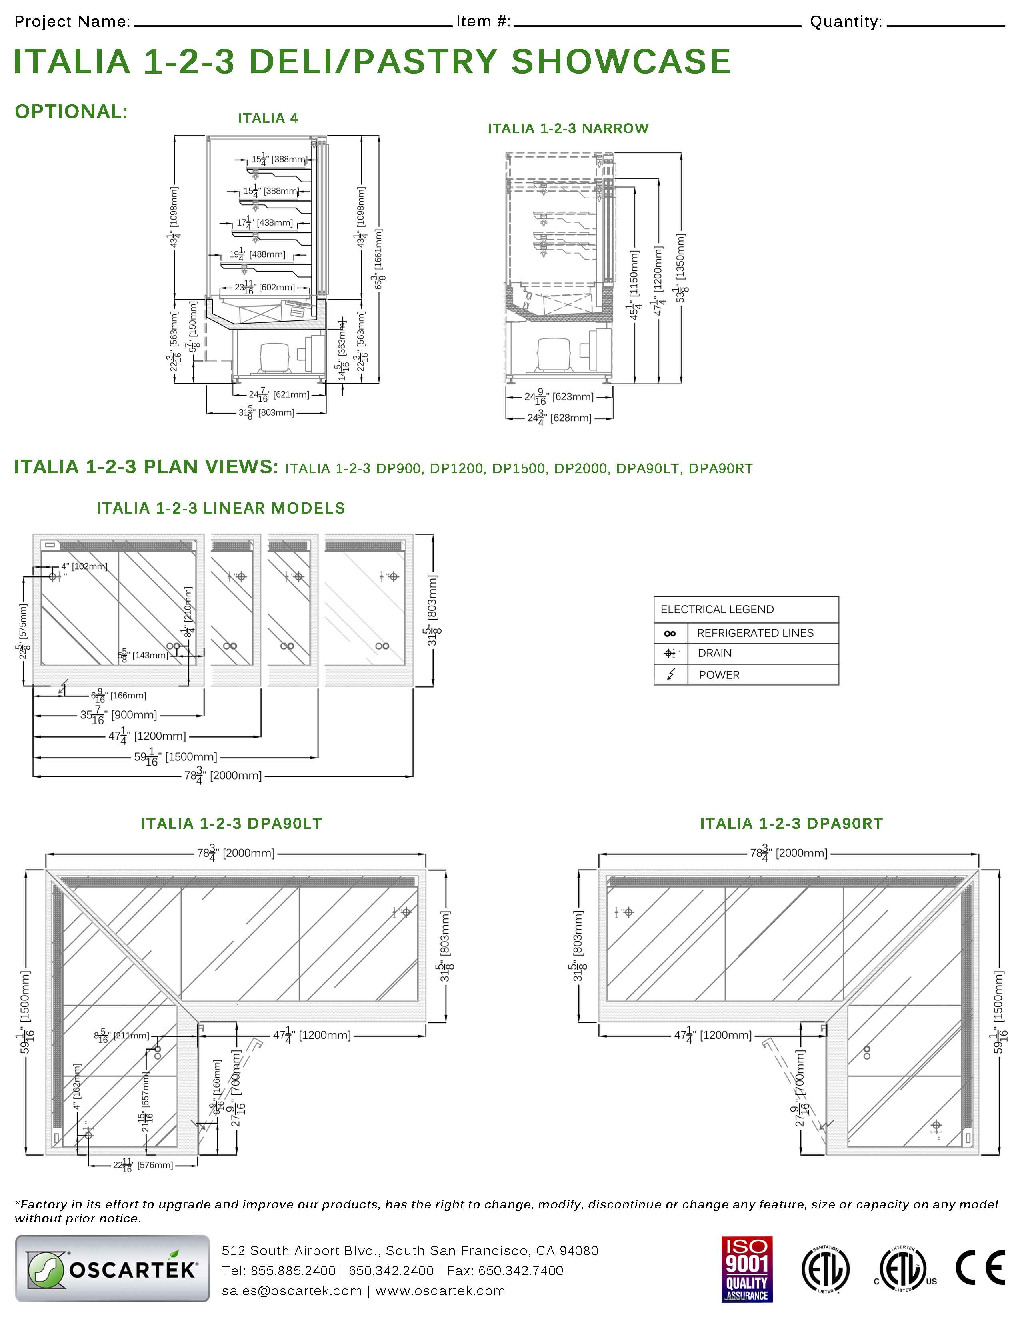 Oscartek ITALIA 2 DP1500 Refrigerated Deli Display Case